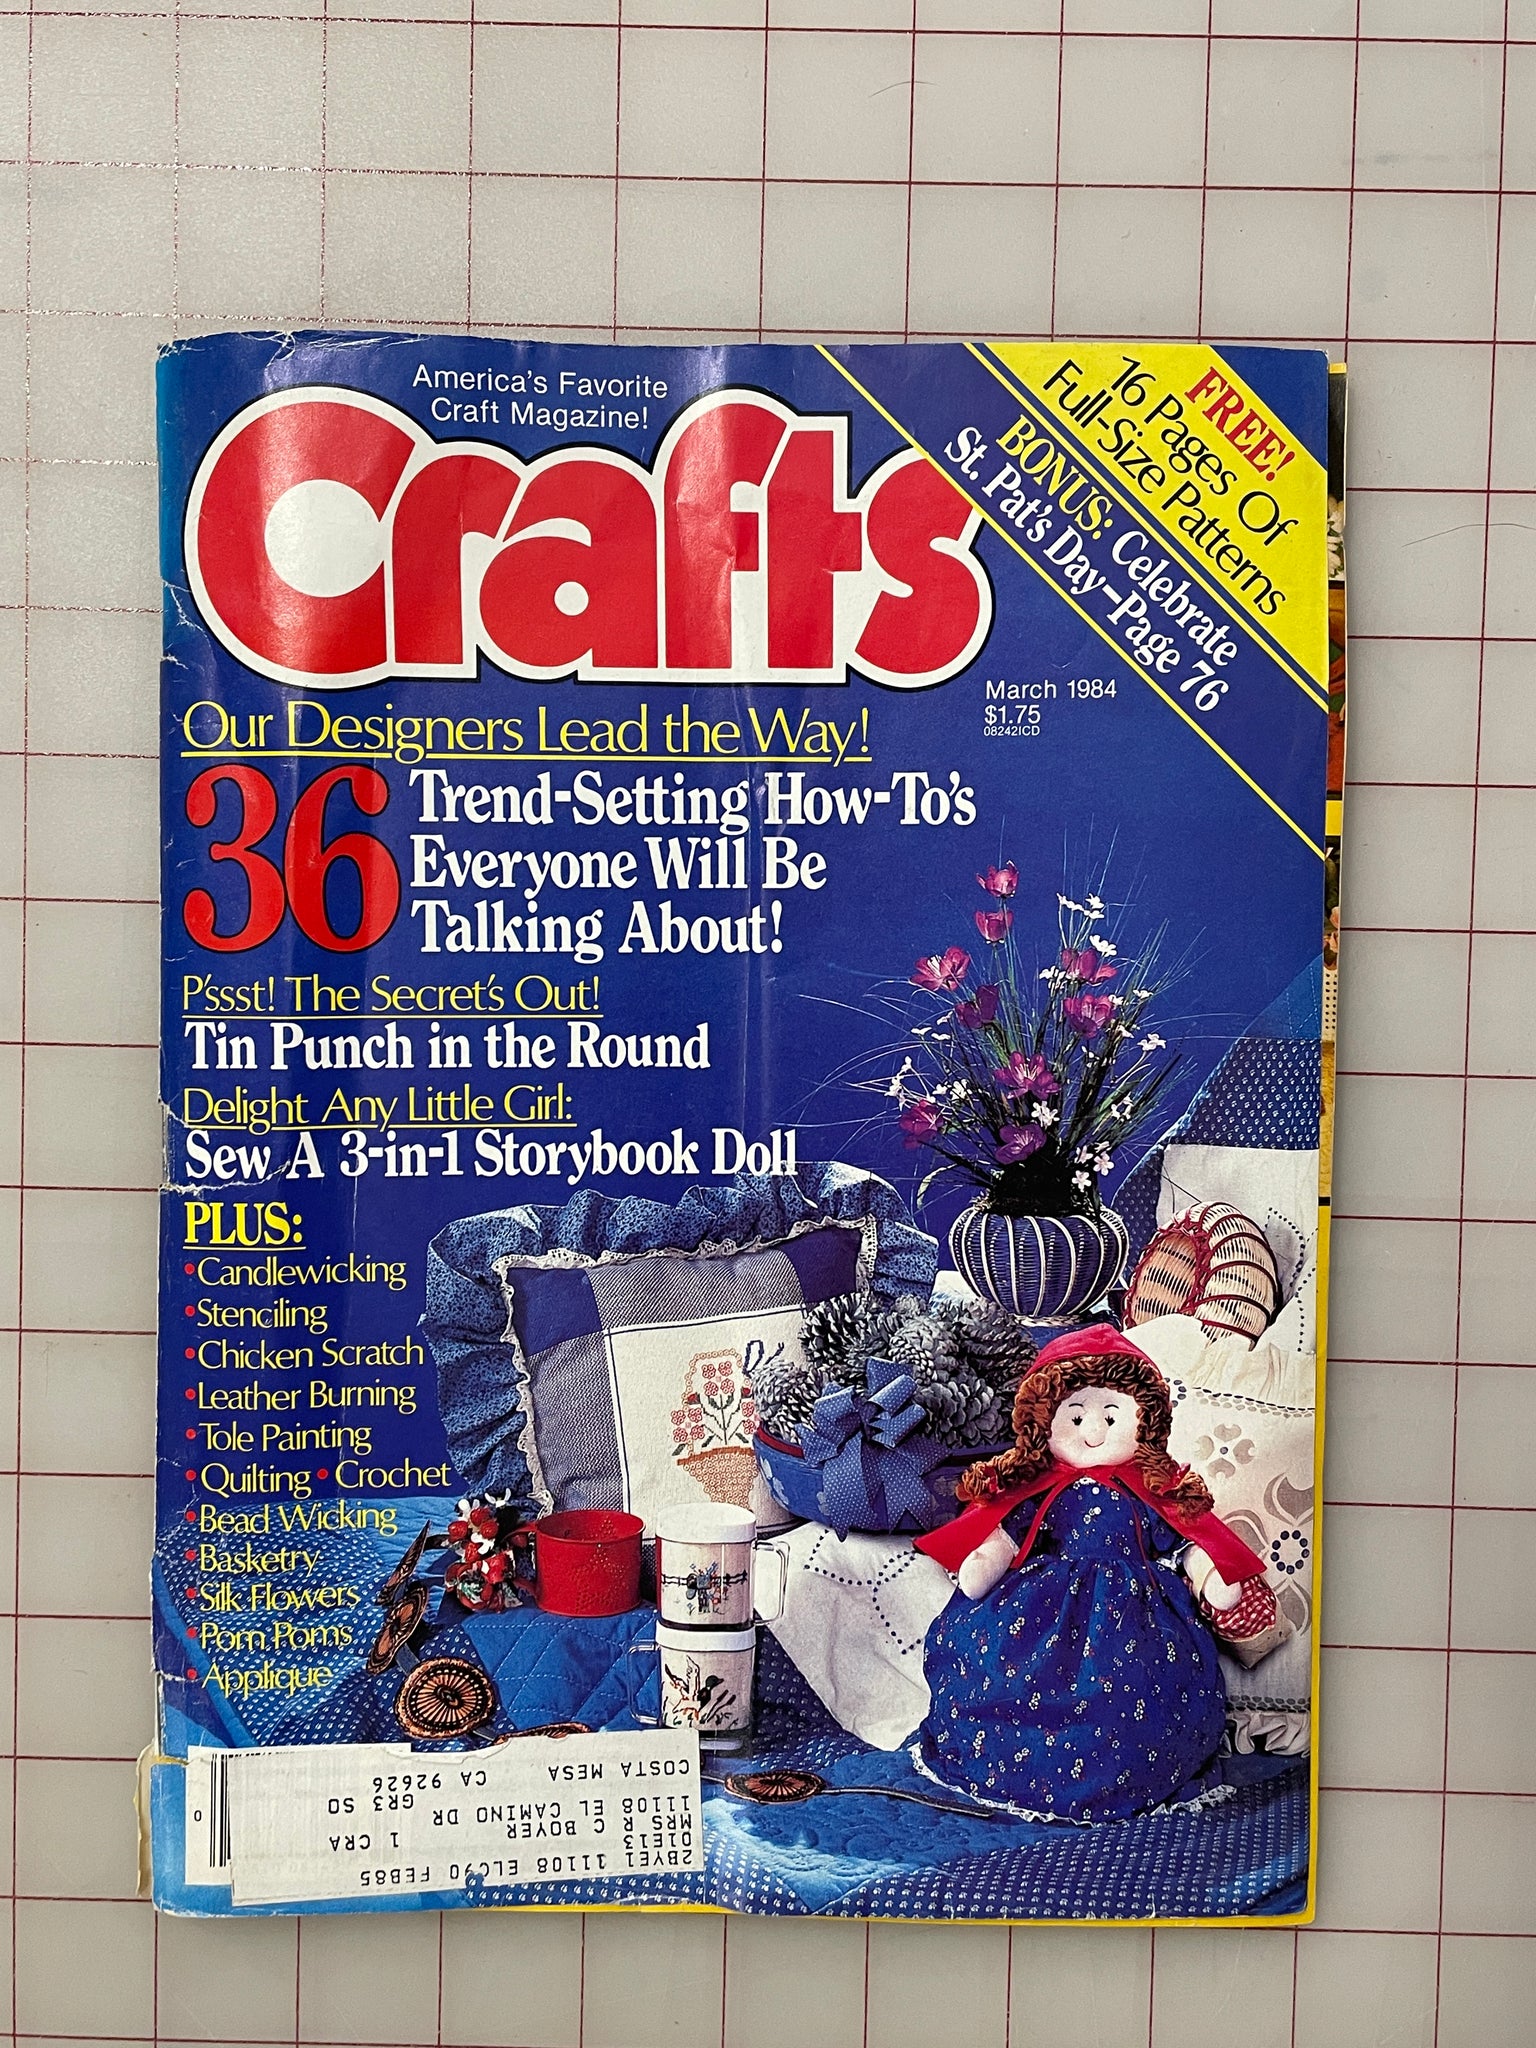 1980's Craft Magazine Bundle - "Crafts"